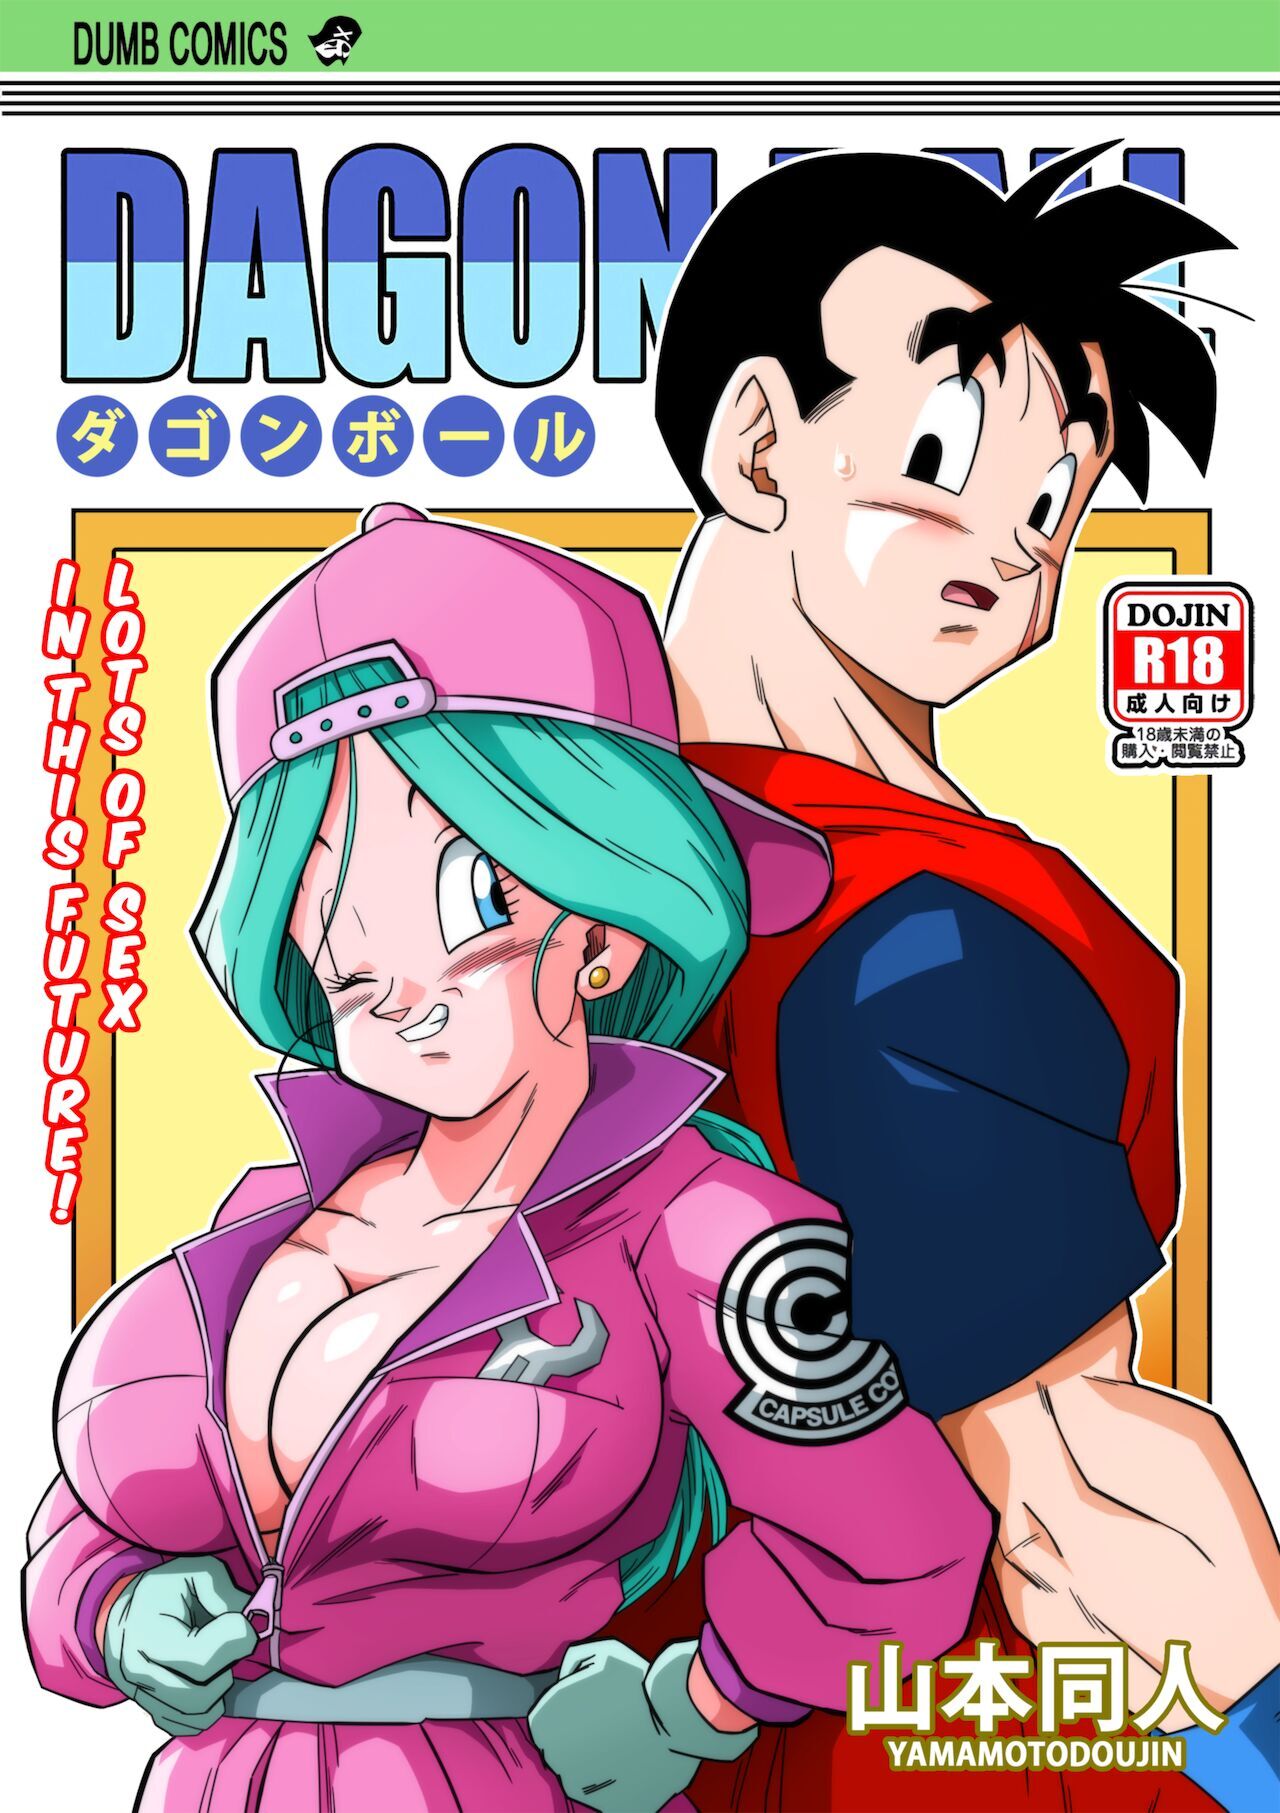 Dragon Ball Sex Hard Cartoon Charcters - Lots of Sex in this Future!! - English - Dragon Ball Hentai